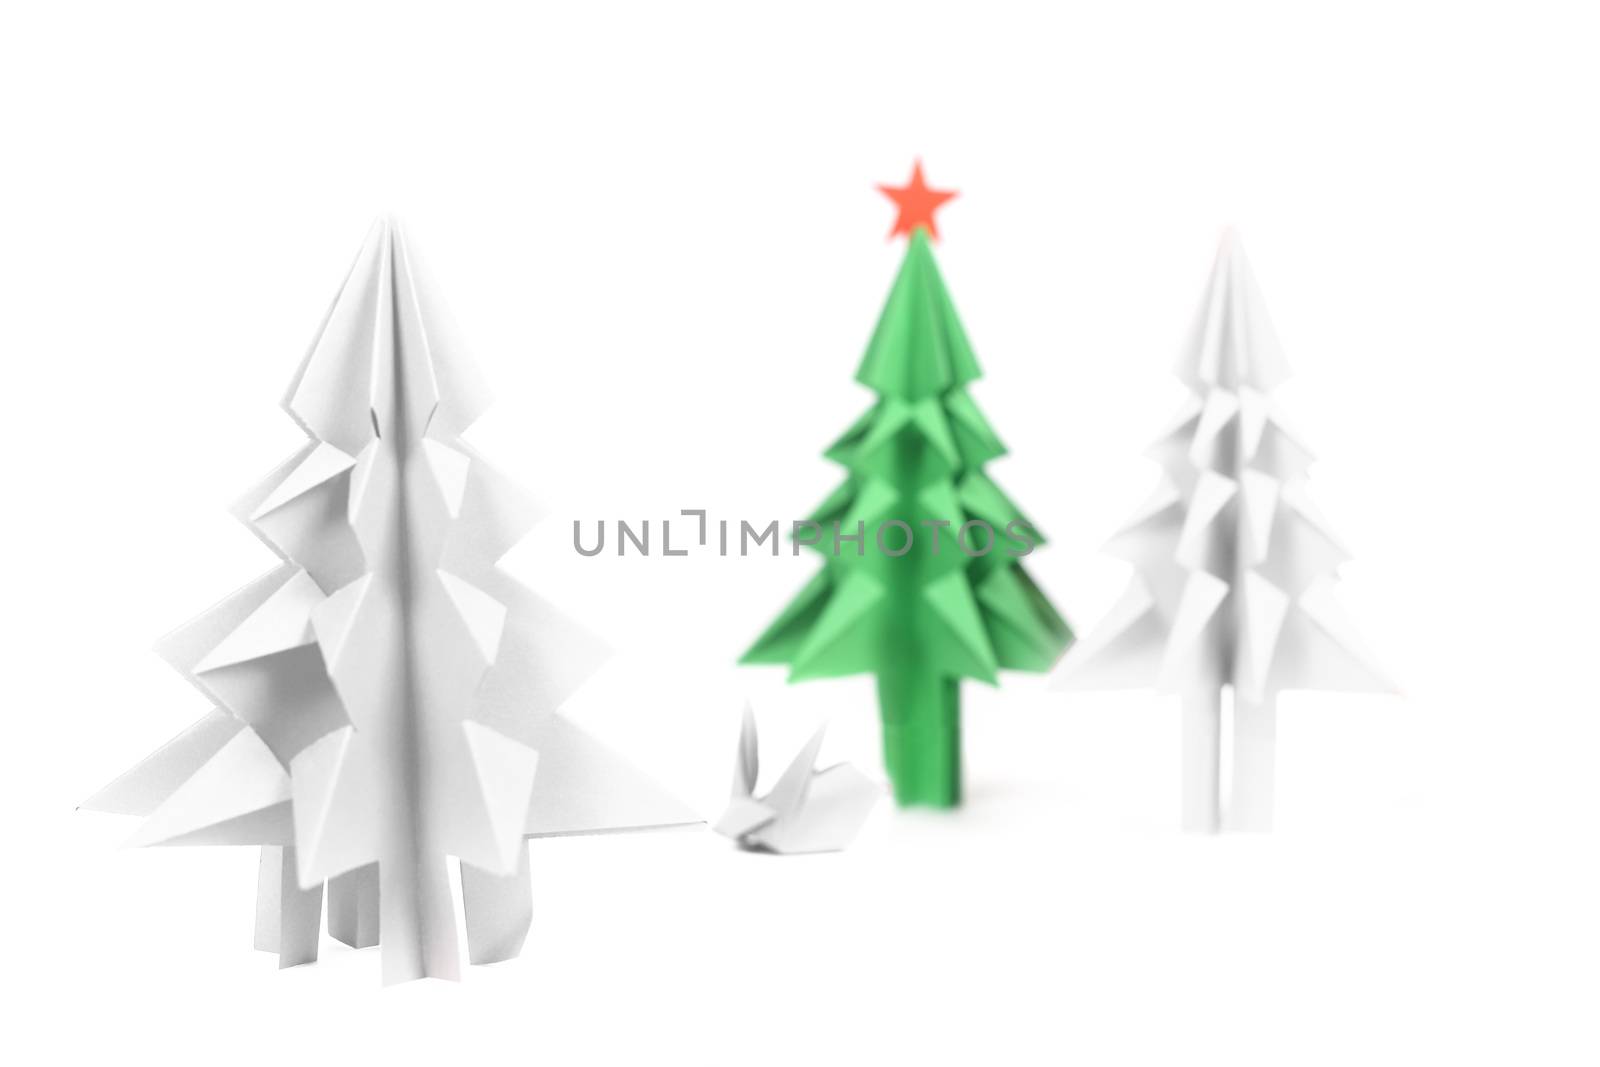 Origami Christmas tree by destillat